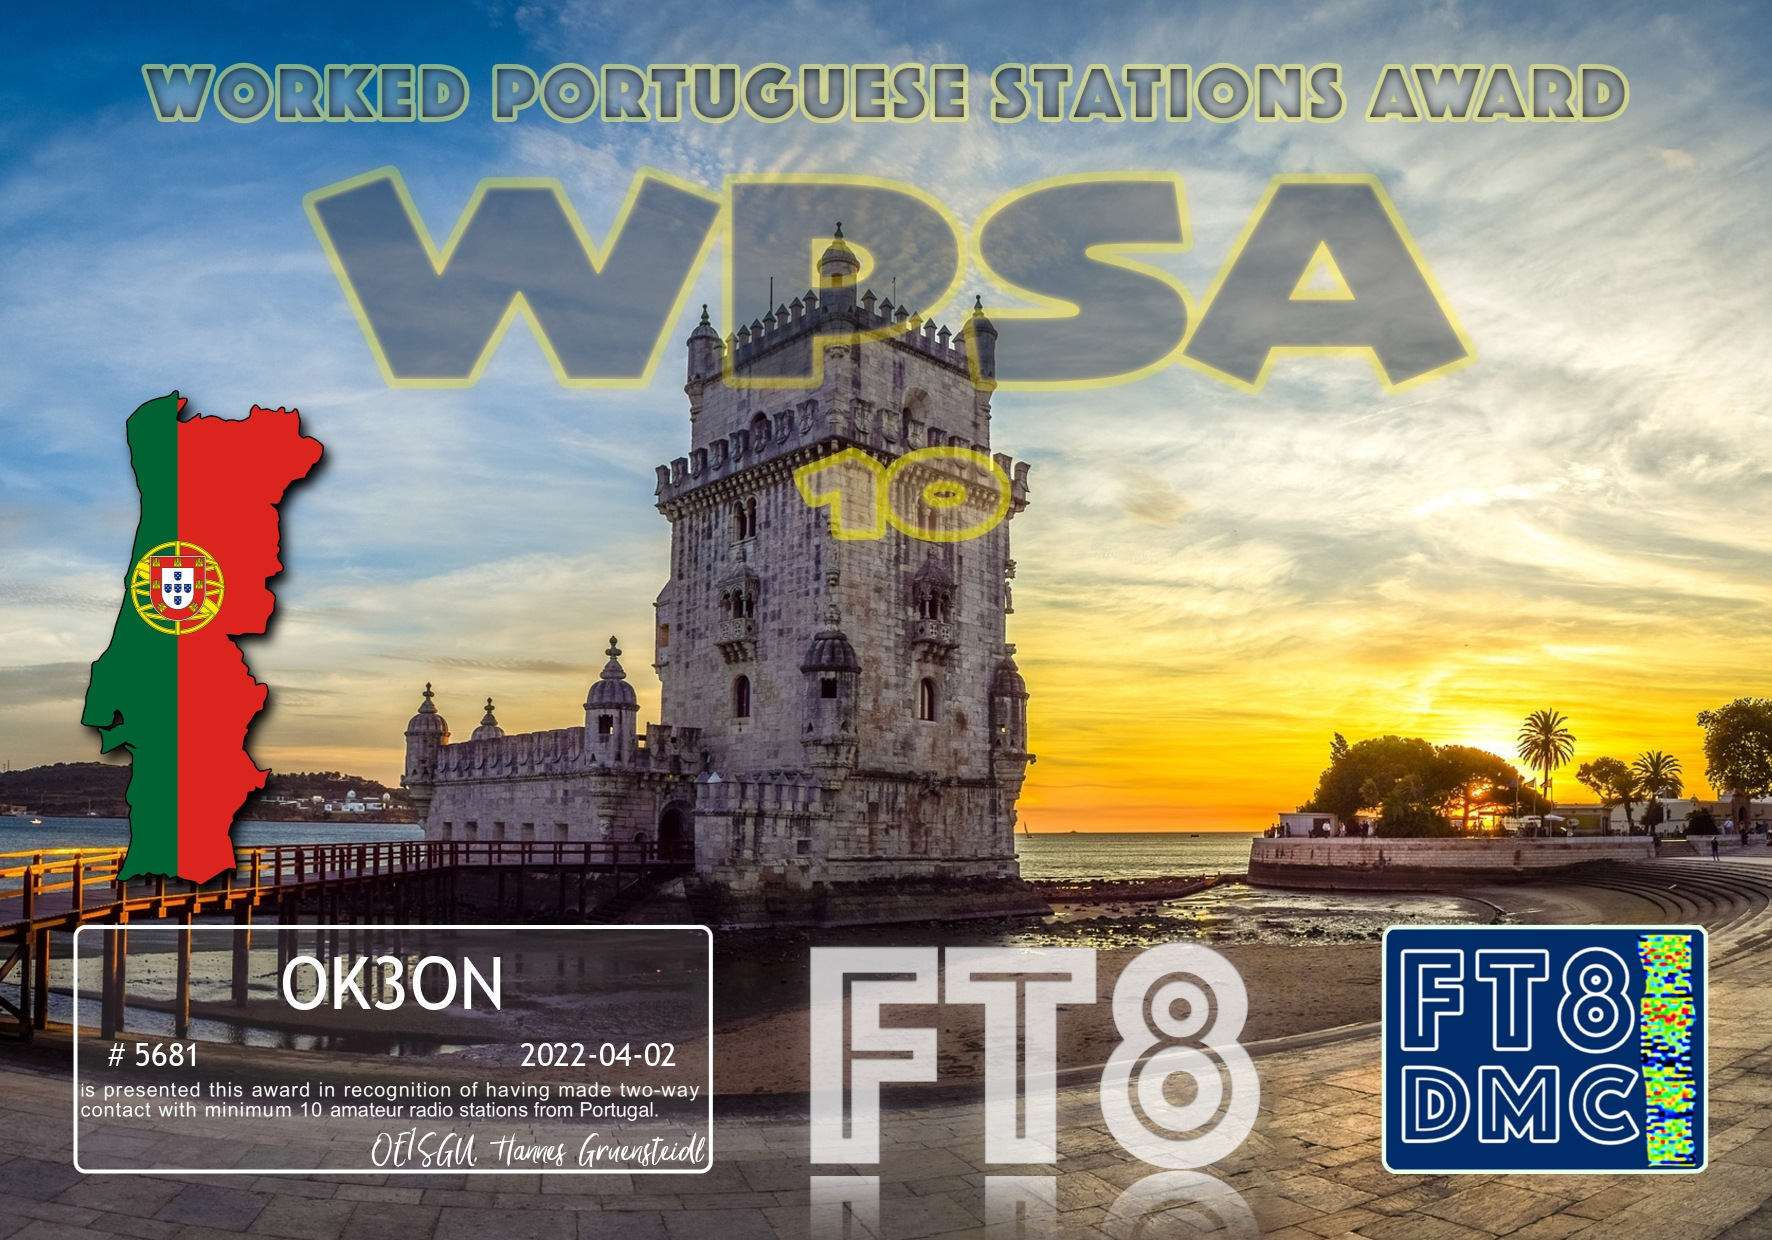 awards/OK3ON-WPSA-10_FT8DMC.jpg